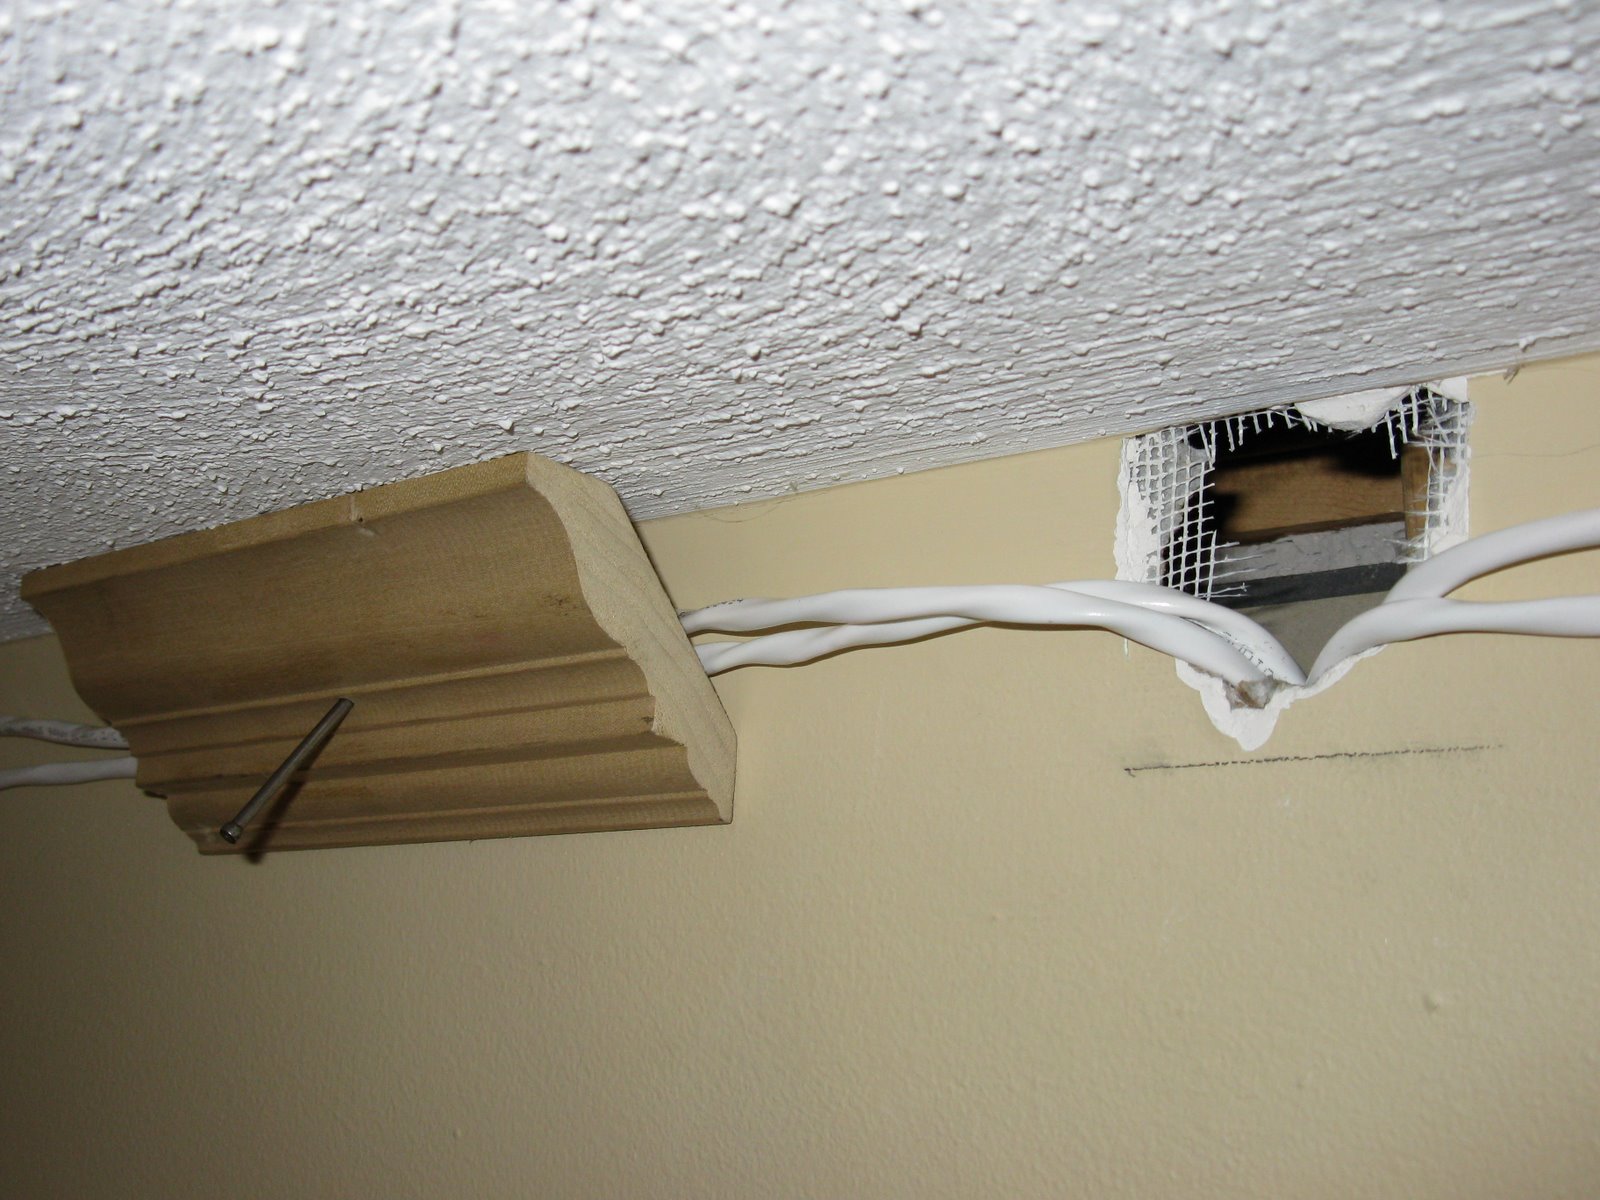 How to Hide Speaker Wire for Surround Sound?